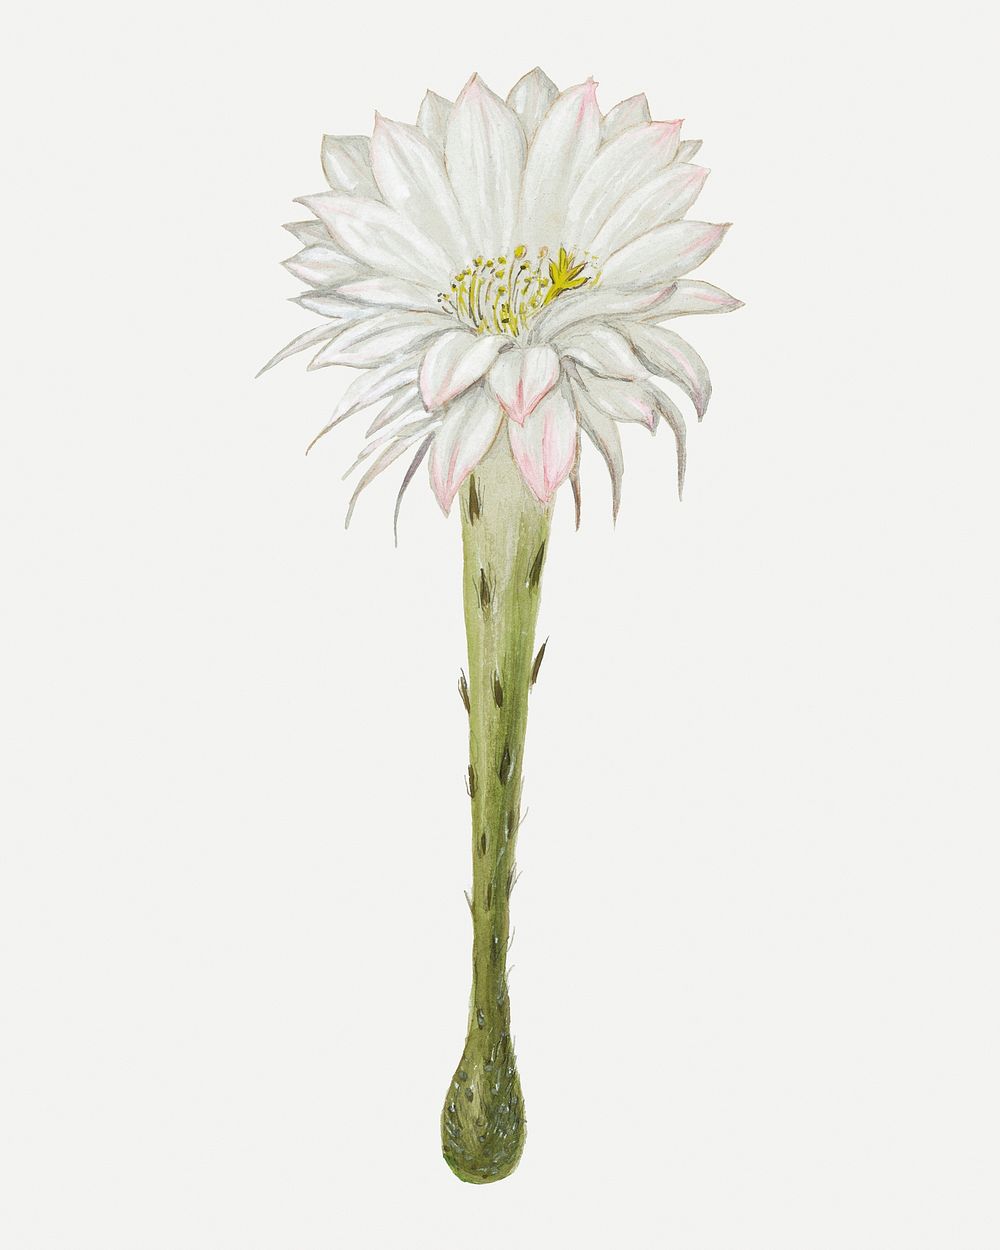 Flower sticker, aesthetic vintage white Easter lily cactus illustration, classic design element psd